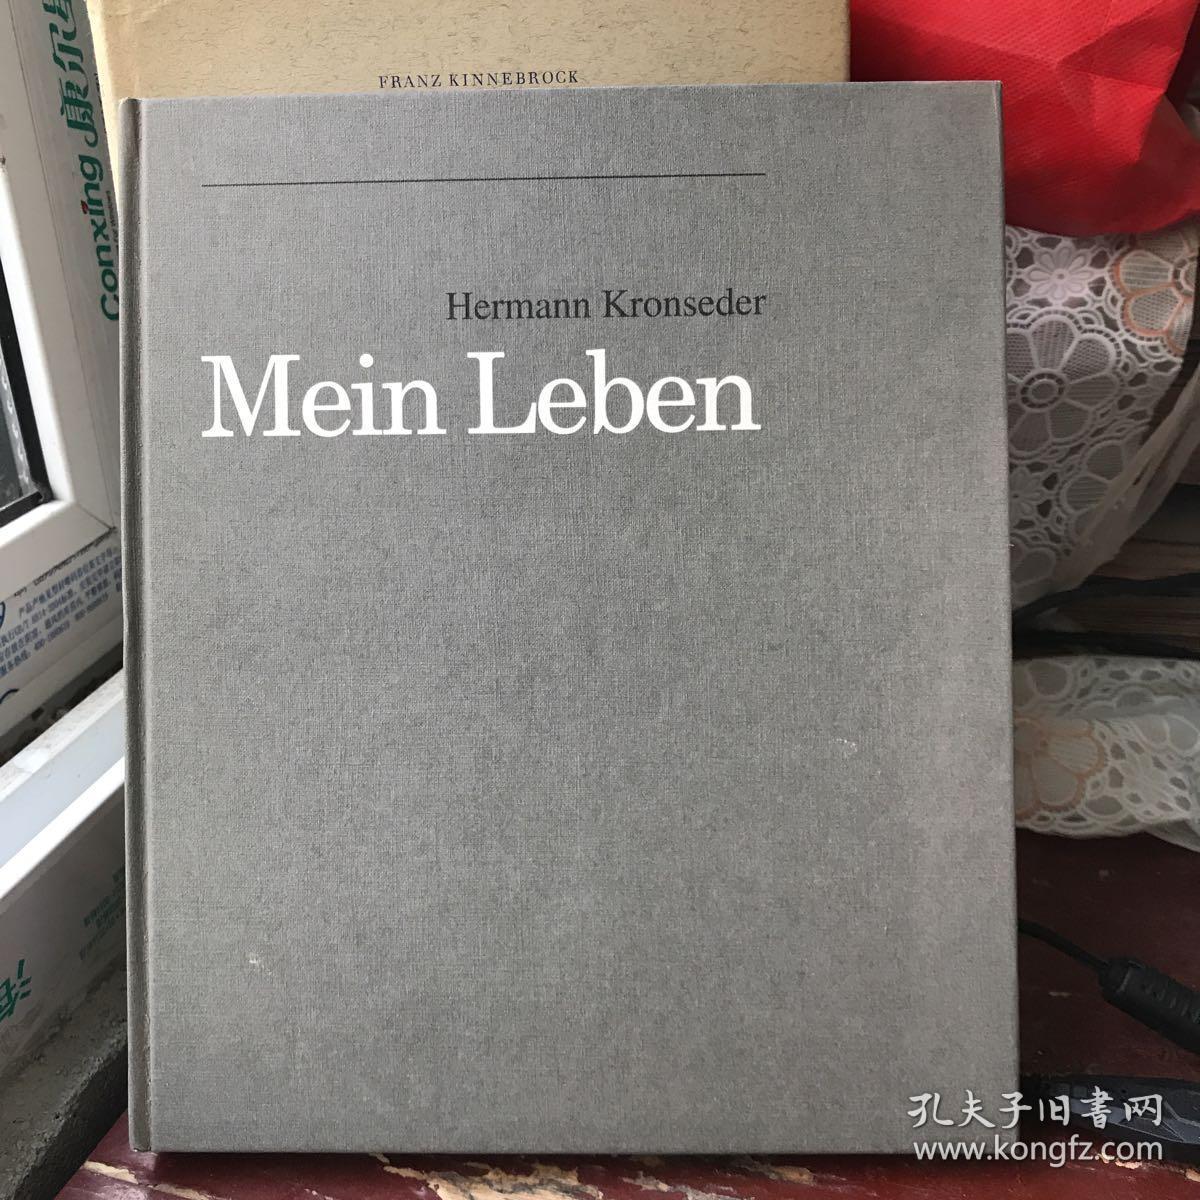 Hermann Kronseder Mein Leben【赫尔曼·克朗塞德我的生活】【精装】       b46-11